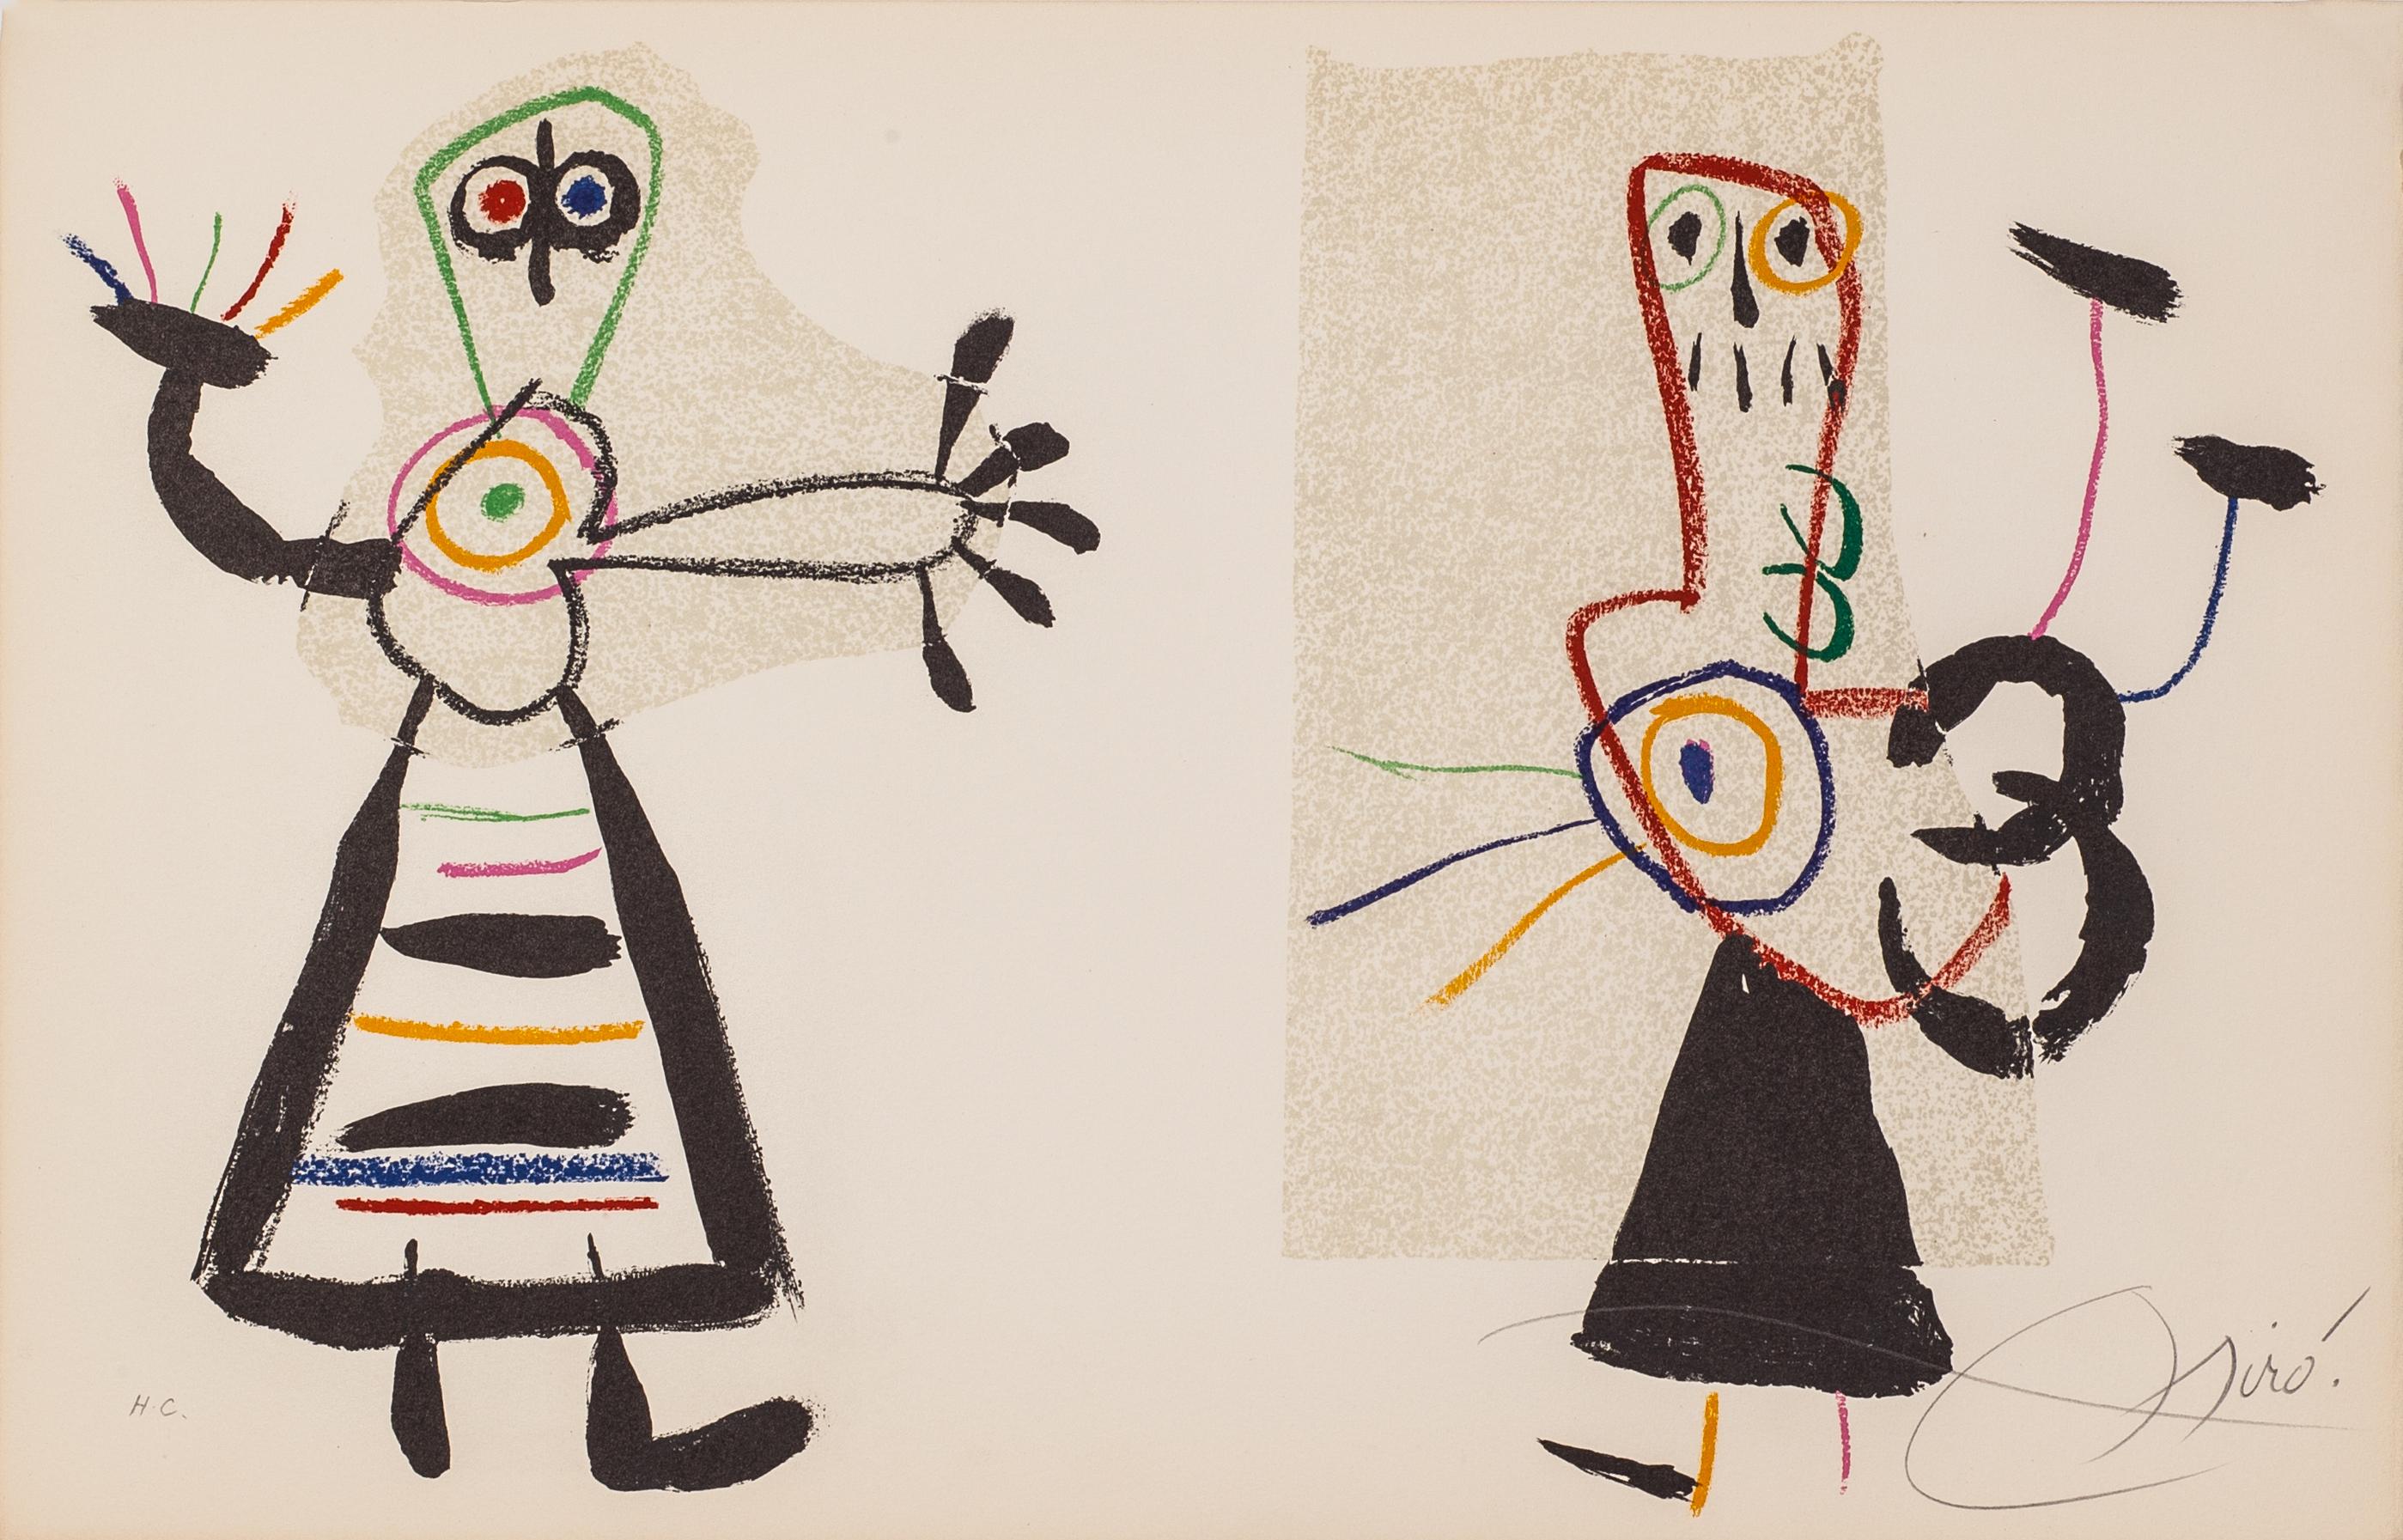 plate 1015 from the portfolio "L'Enfance d'UBU". Original Lithograph - Print by Joan Miró